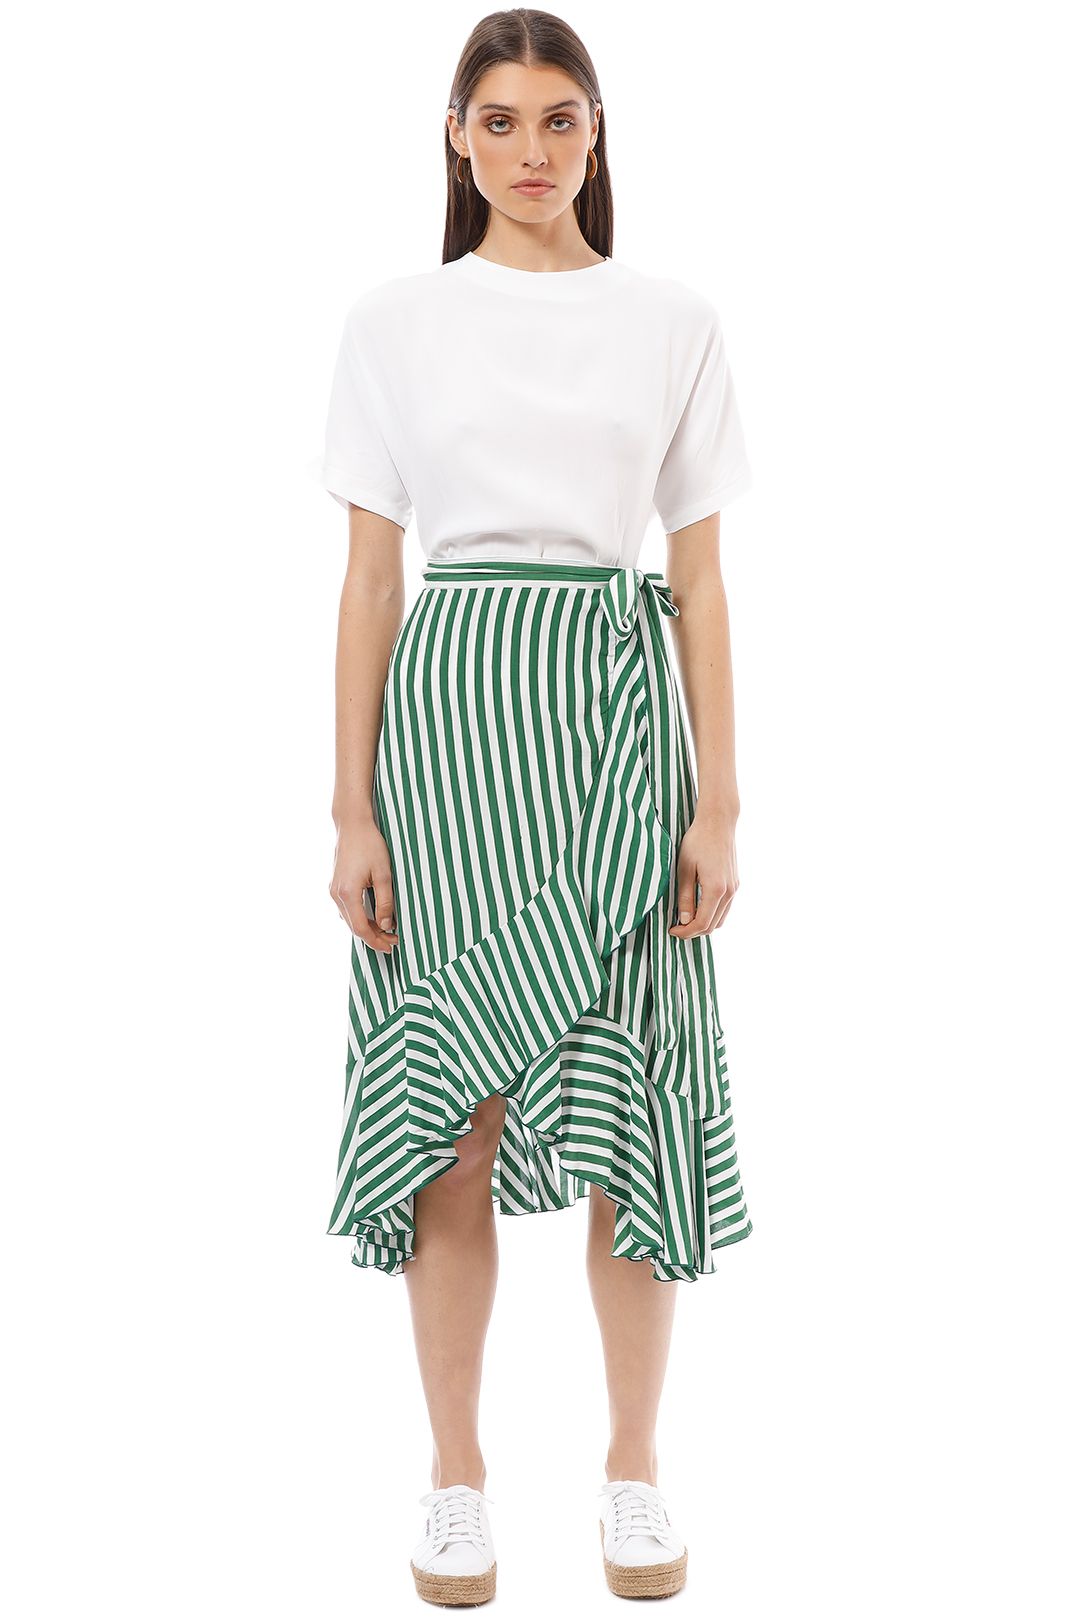 Tramonti Skirt in Zeus Stripe by Faithfull the Brand for Rent